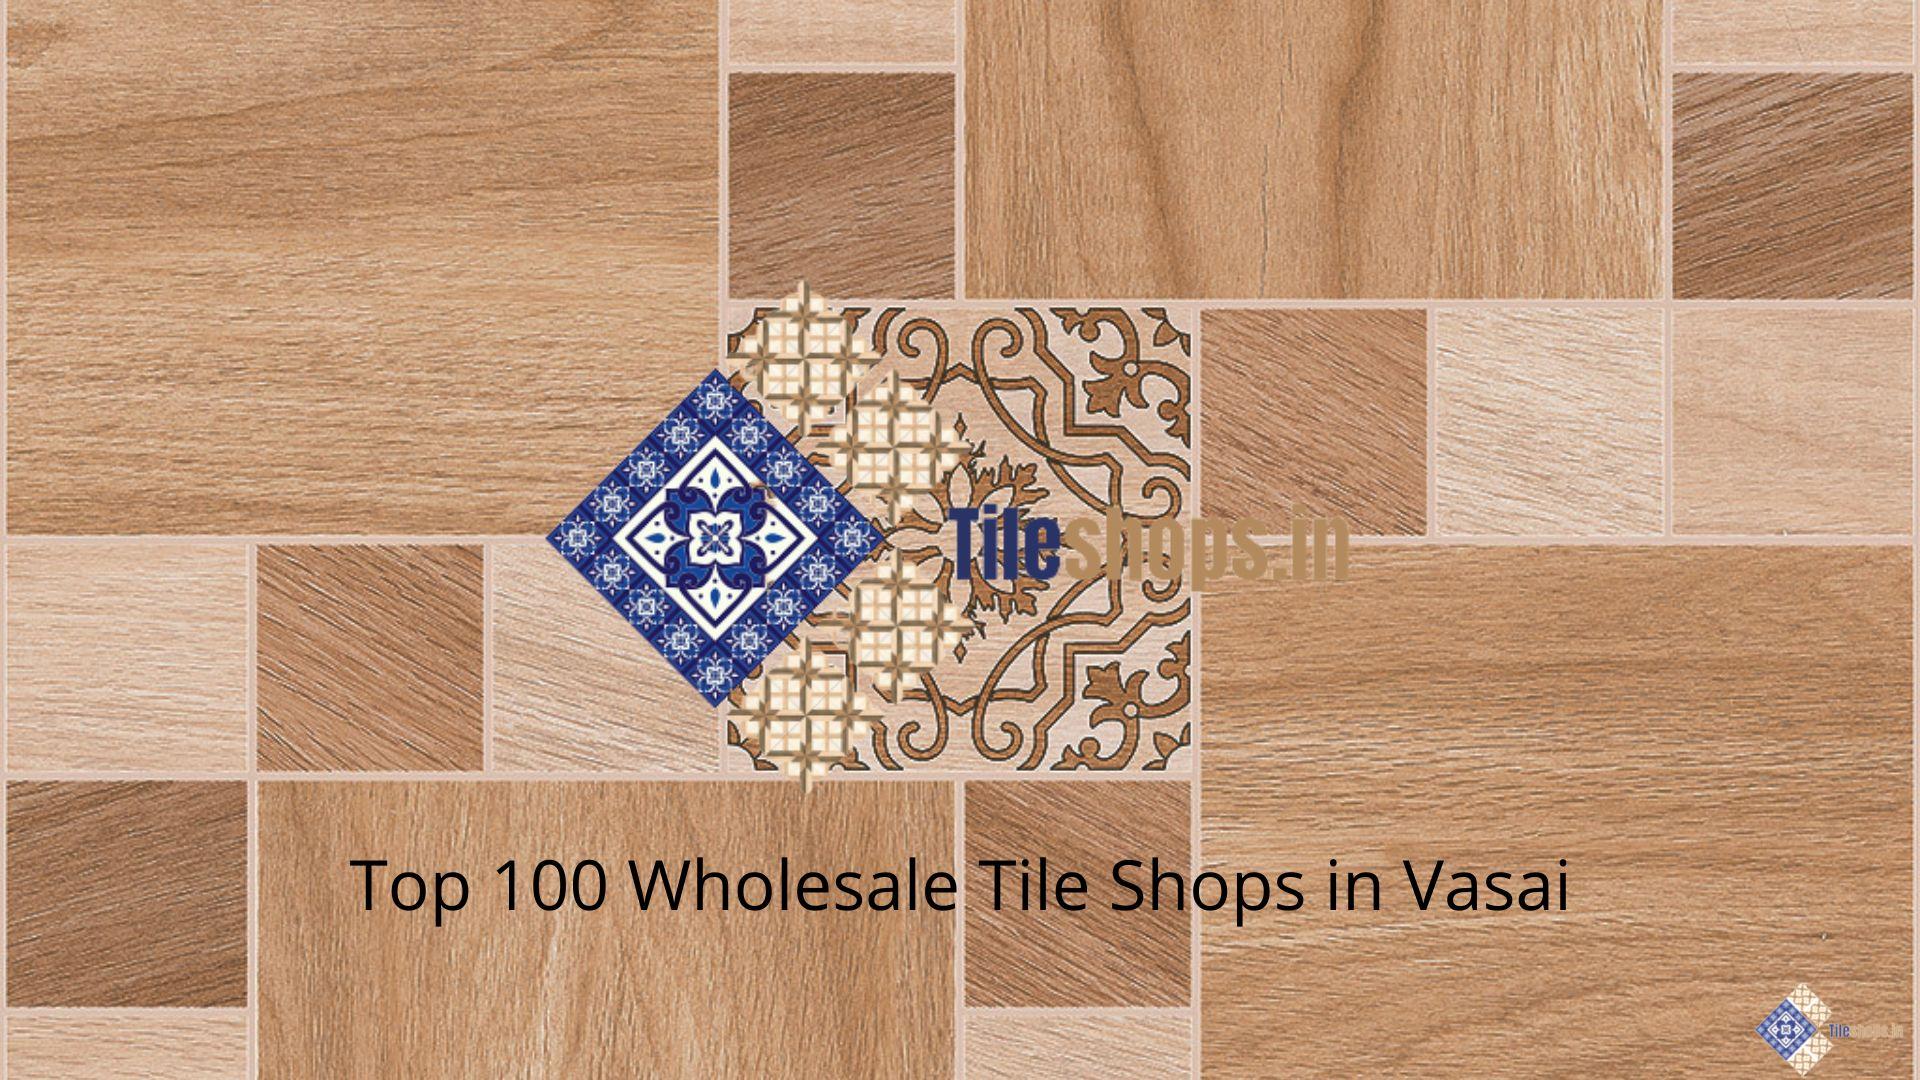 Top 100 Wholesale Tile Shops in Vasai